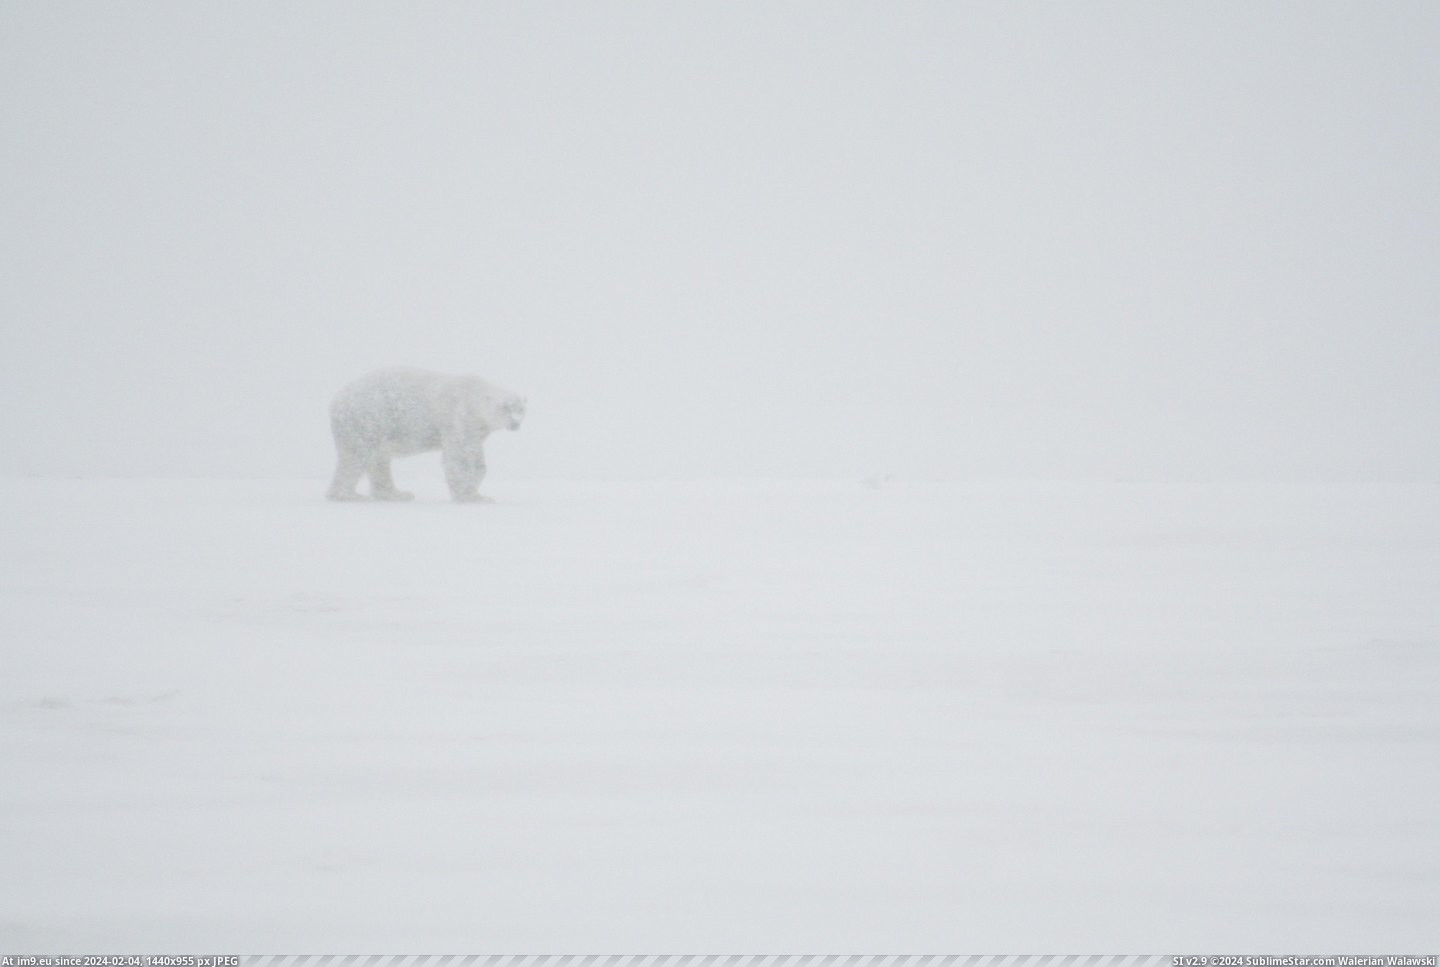 #Alaska #Bear #Snowstorm #Polar #Actual [Pics] An actual polar bear in an actual snowstorm. Took this in Alaska. Pic. (Image of album My r/PICS favs))